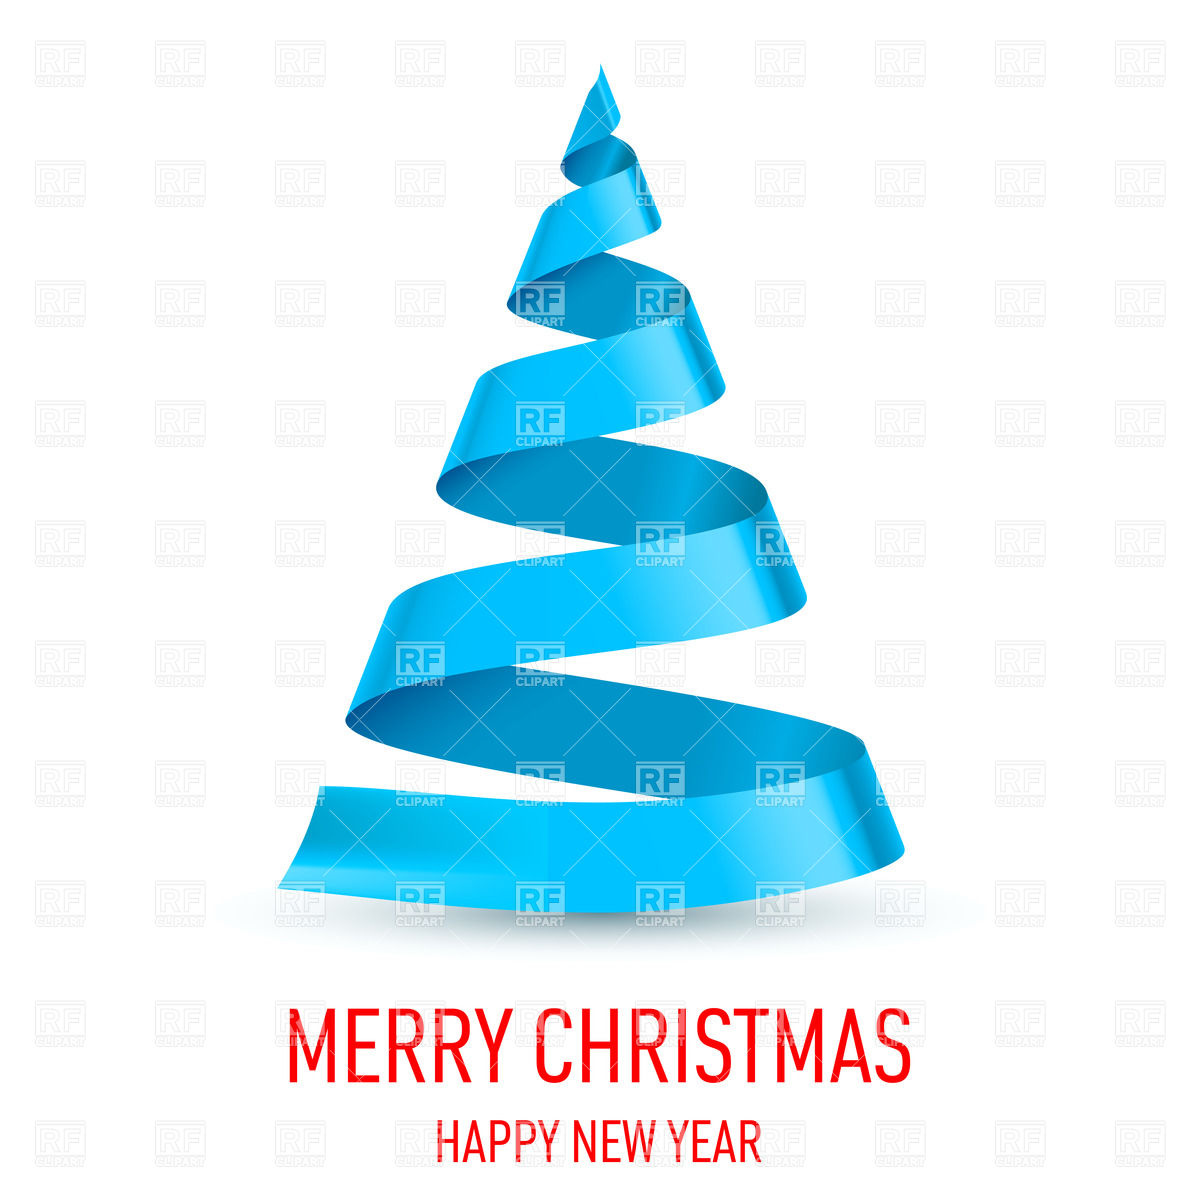 Blue Ribbon Christmas Tree On White Background 25973 Design Elements    